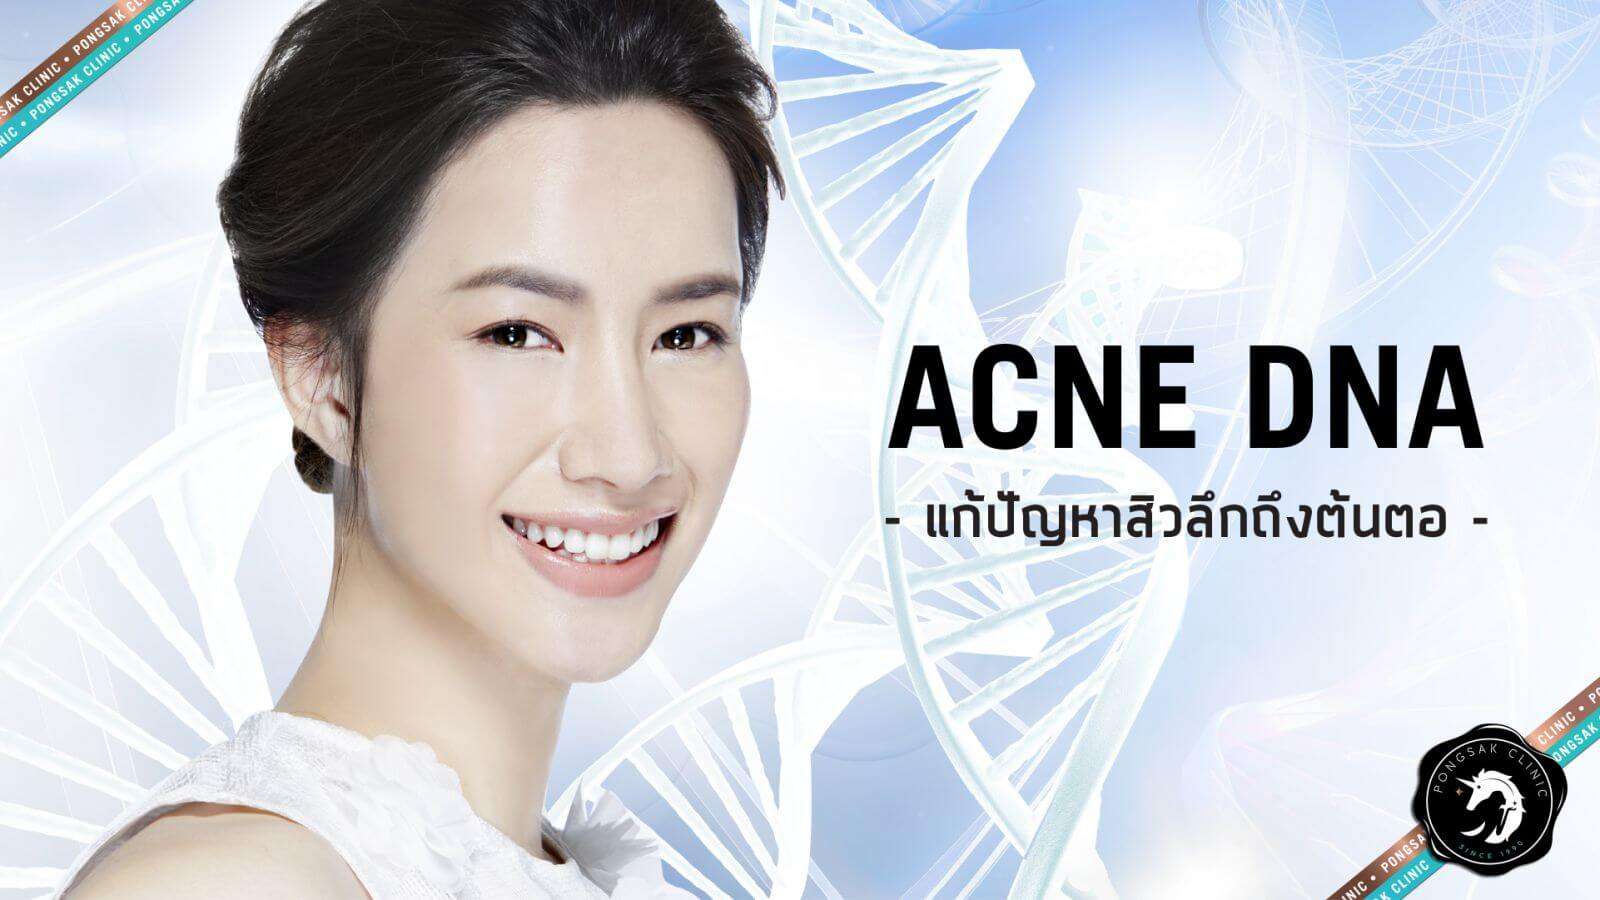 Acne DNA